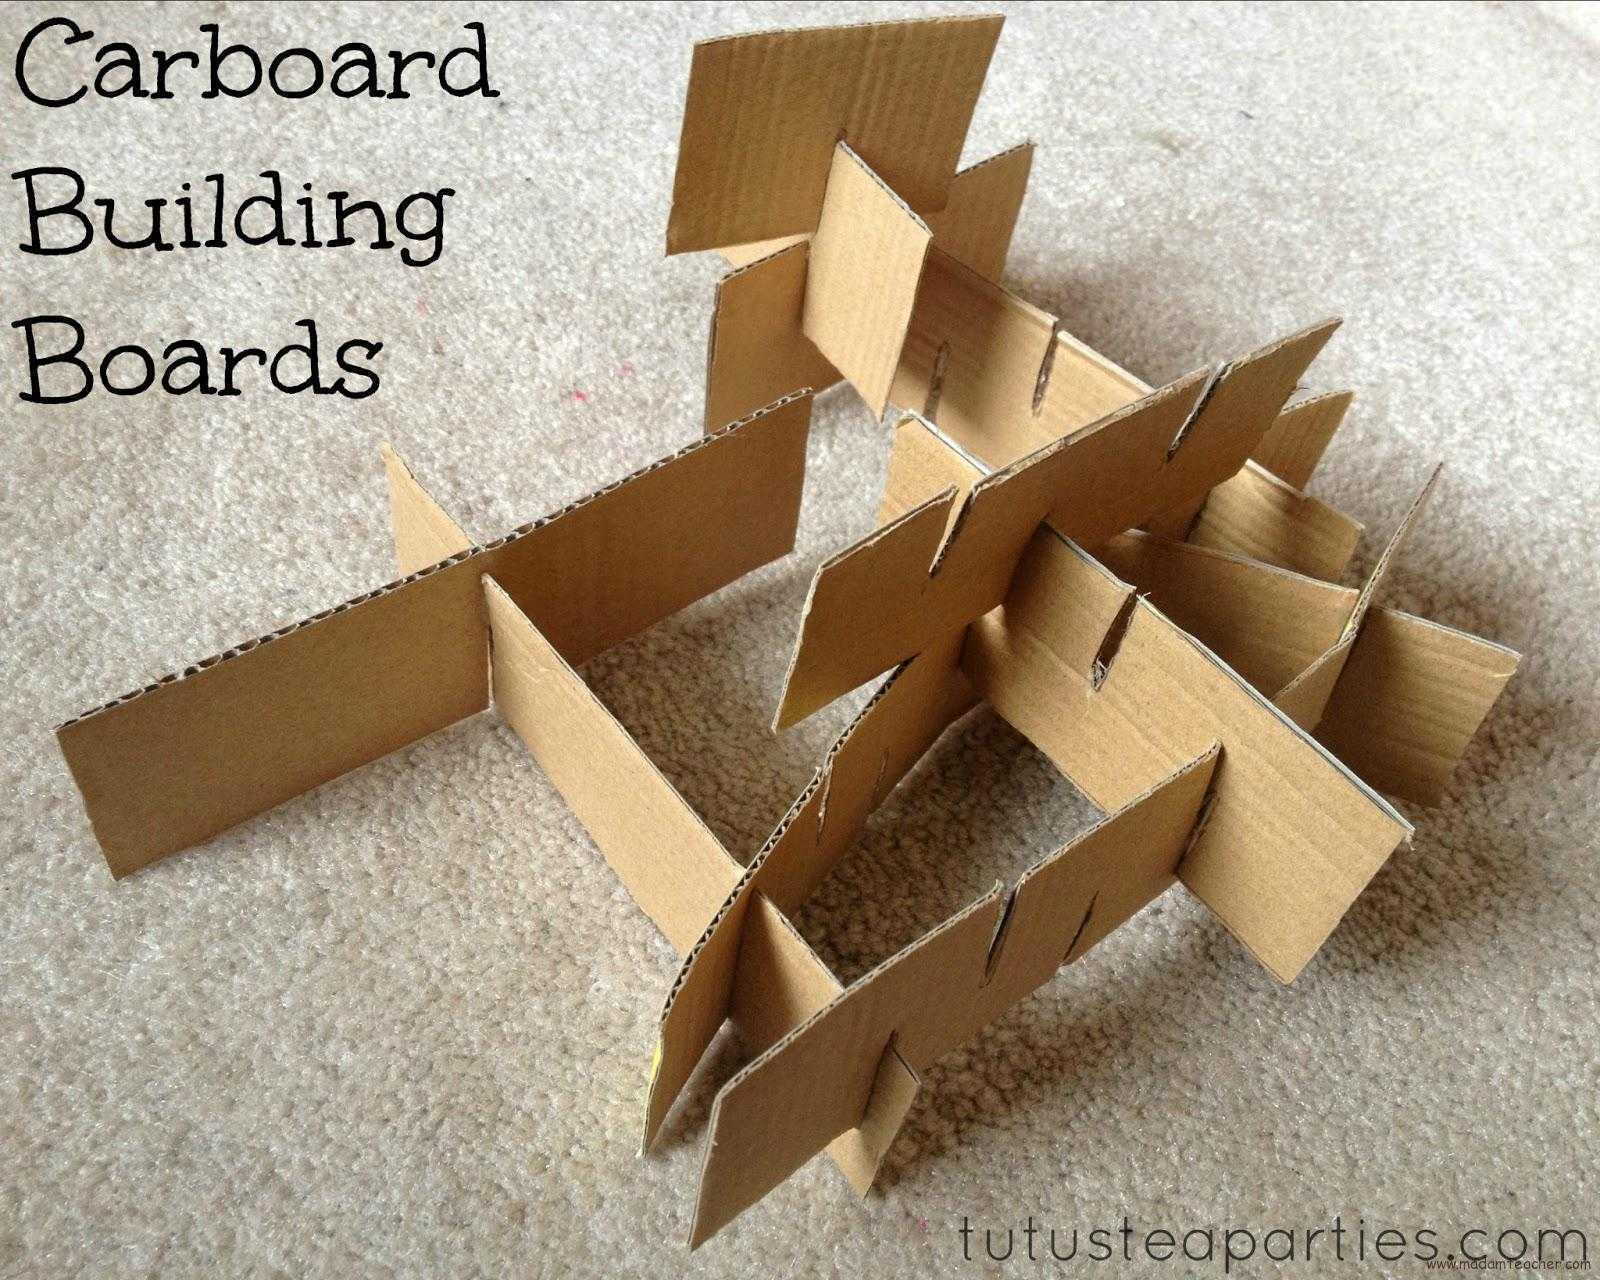 Carboard Building Boards